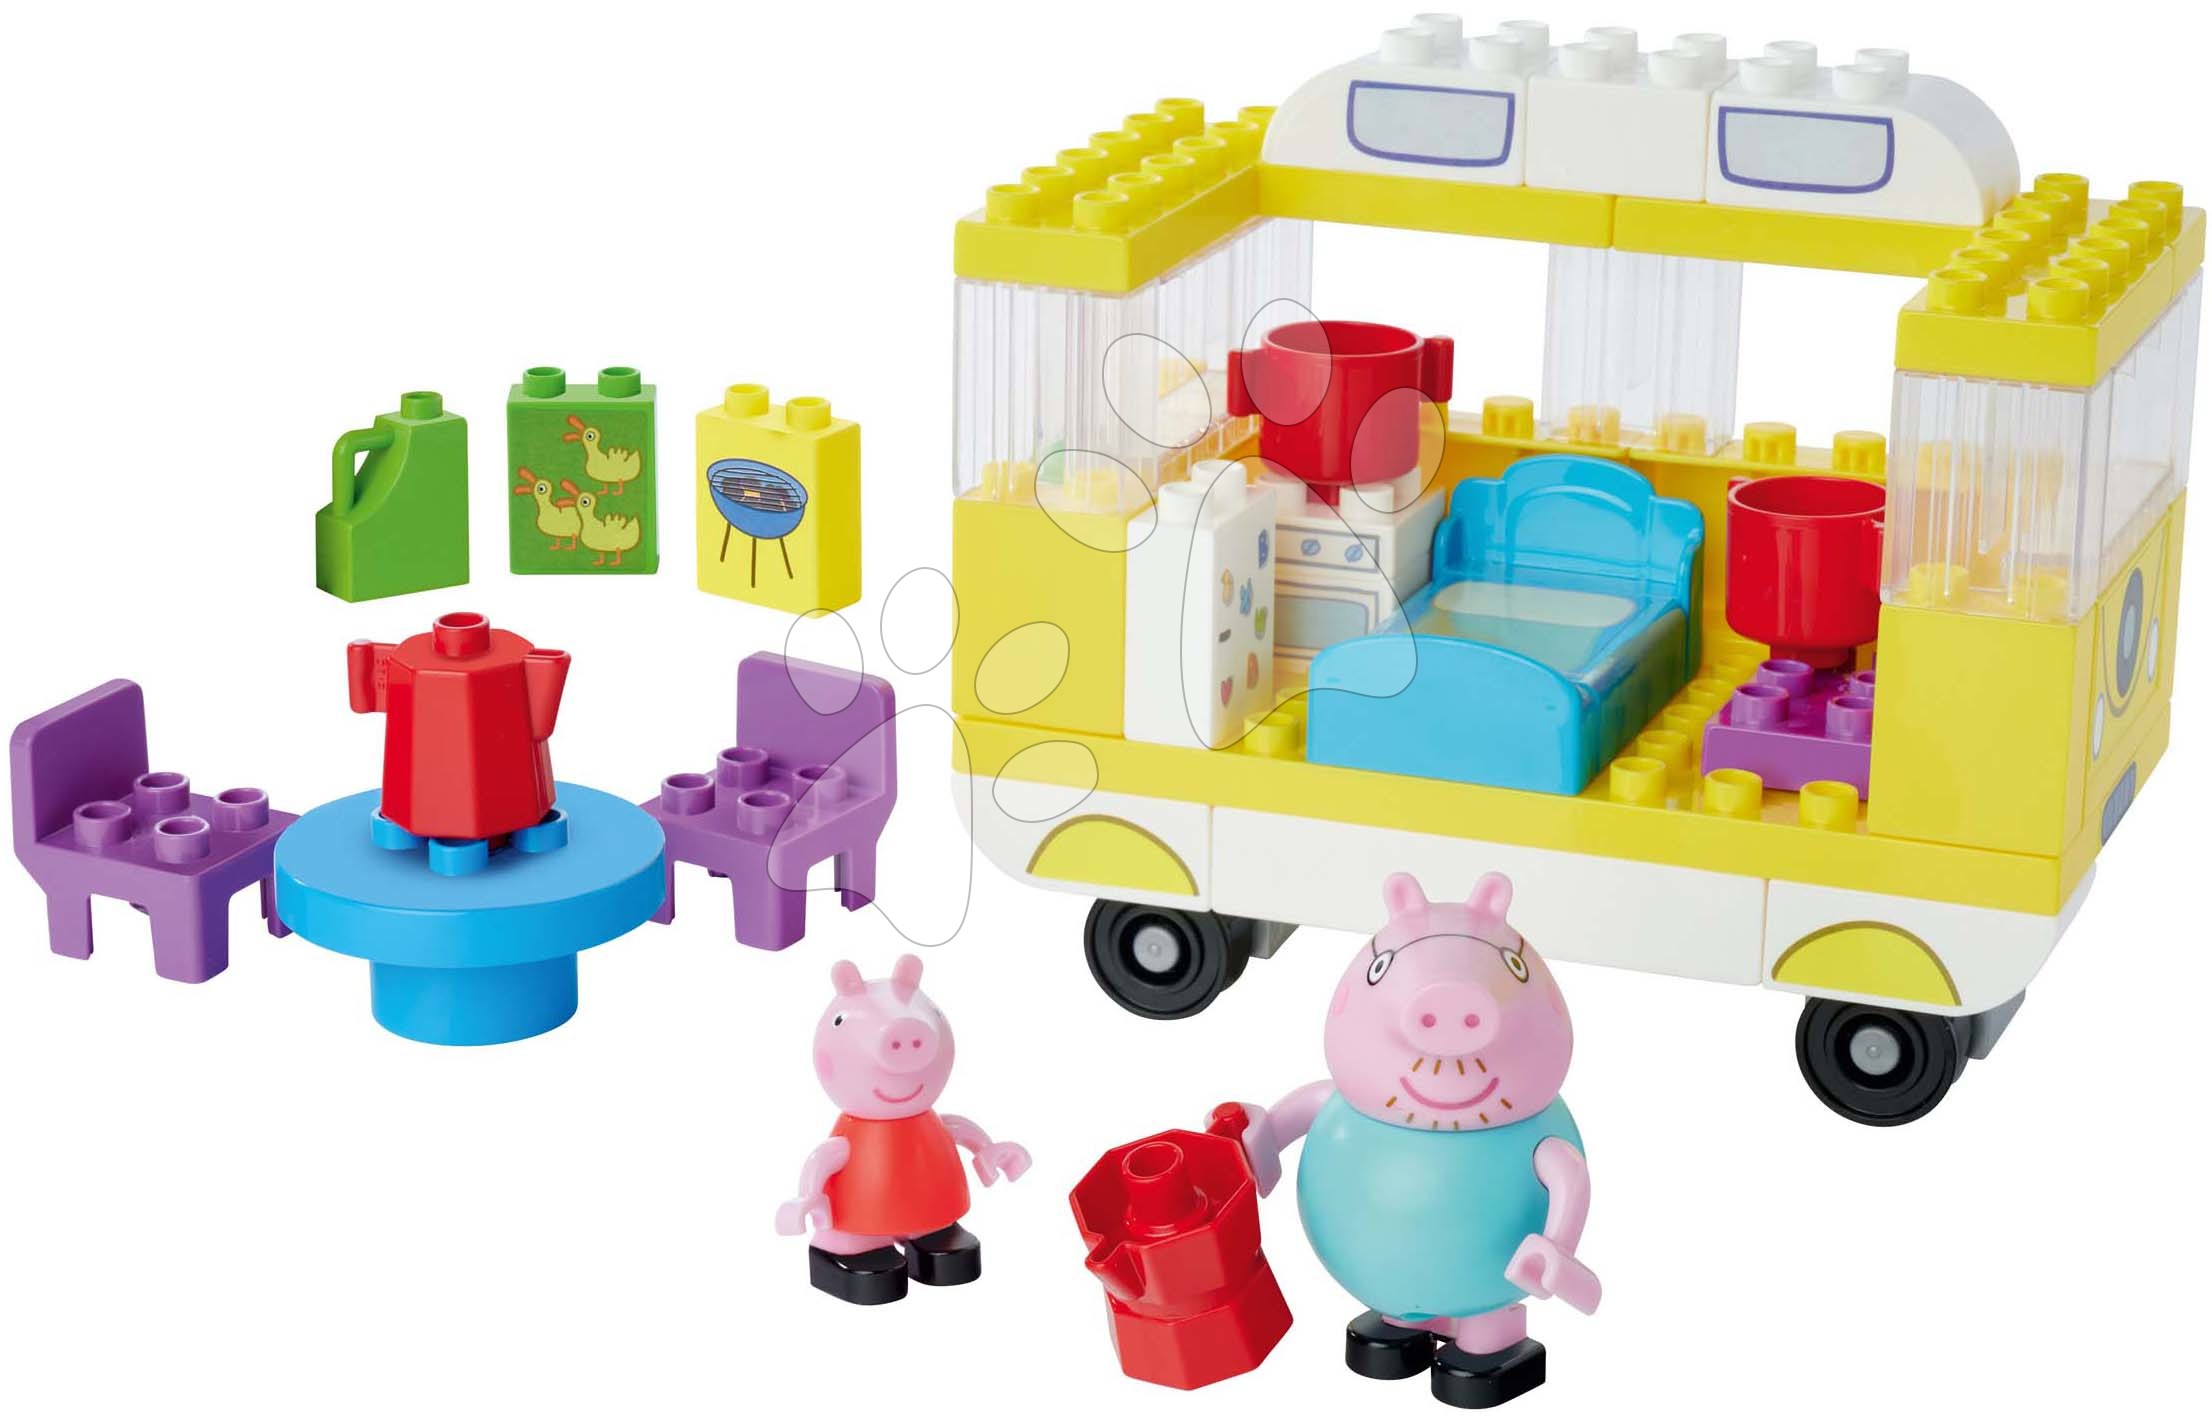 Stavebnice BIG-Bloxx jako lego - Stavebnice Peppa Pig Campervan PlayBig Bloxx BIG auto karavan s výbavou a 2 postavičky 52 dílů od 1,5-5 let